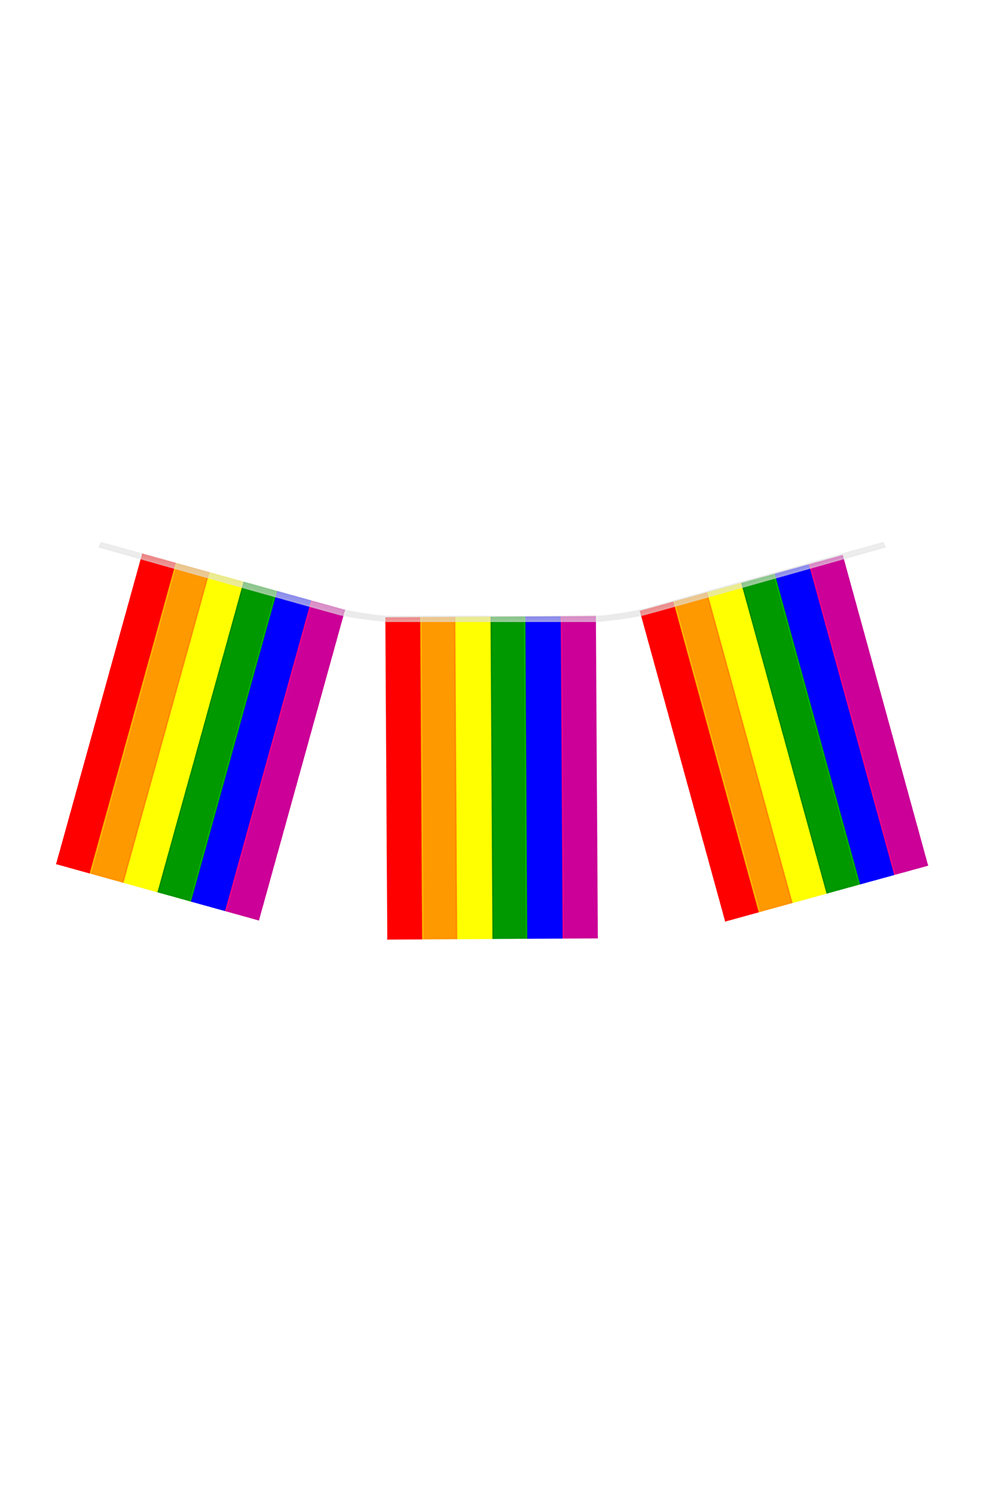 Bunting Rainbow 7m W/24 Rect Flags Nylon